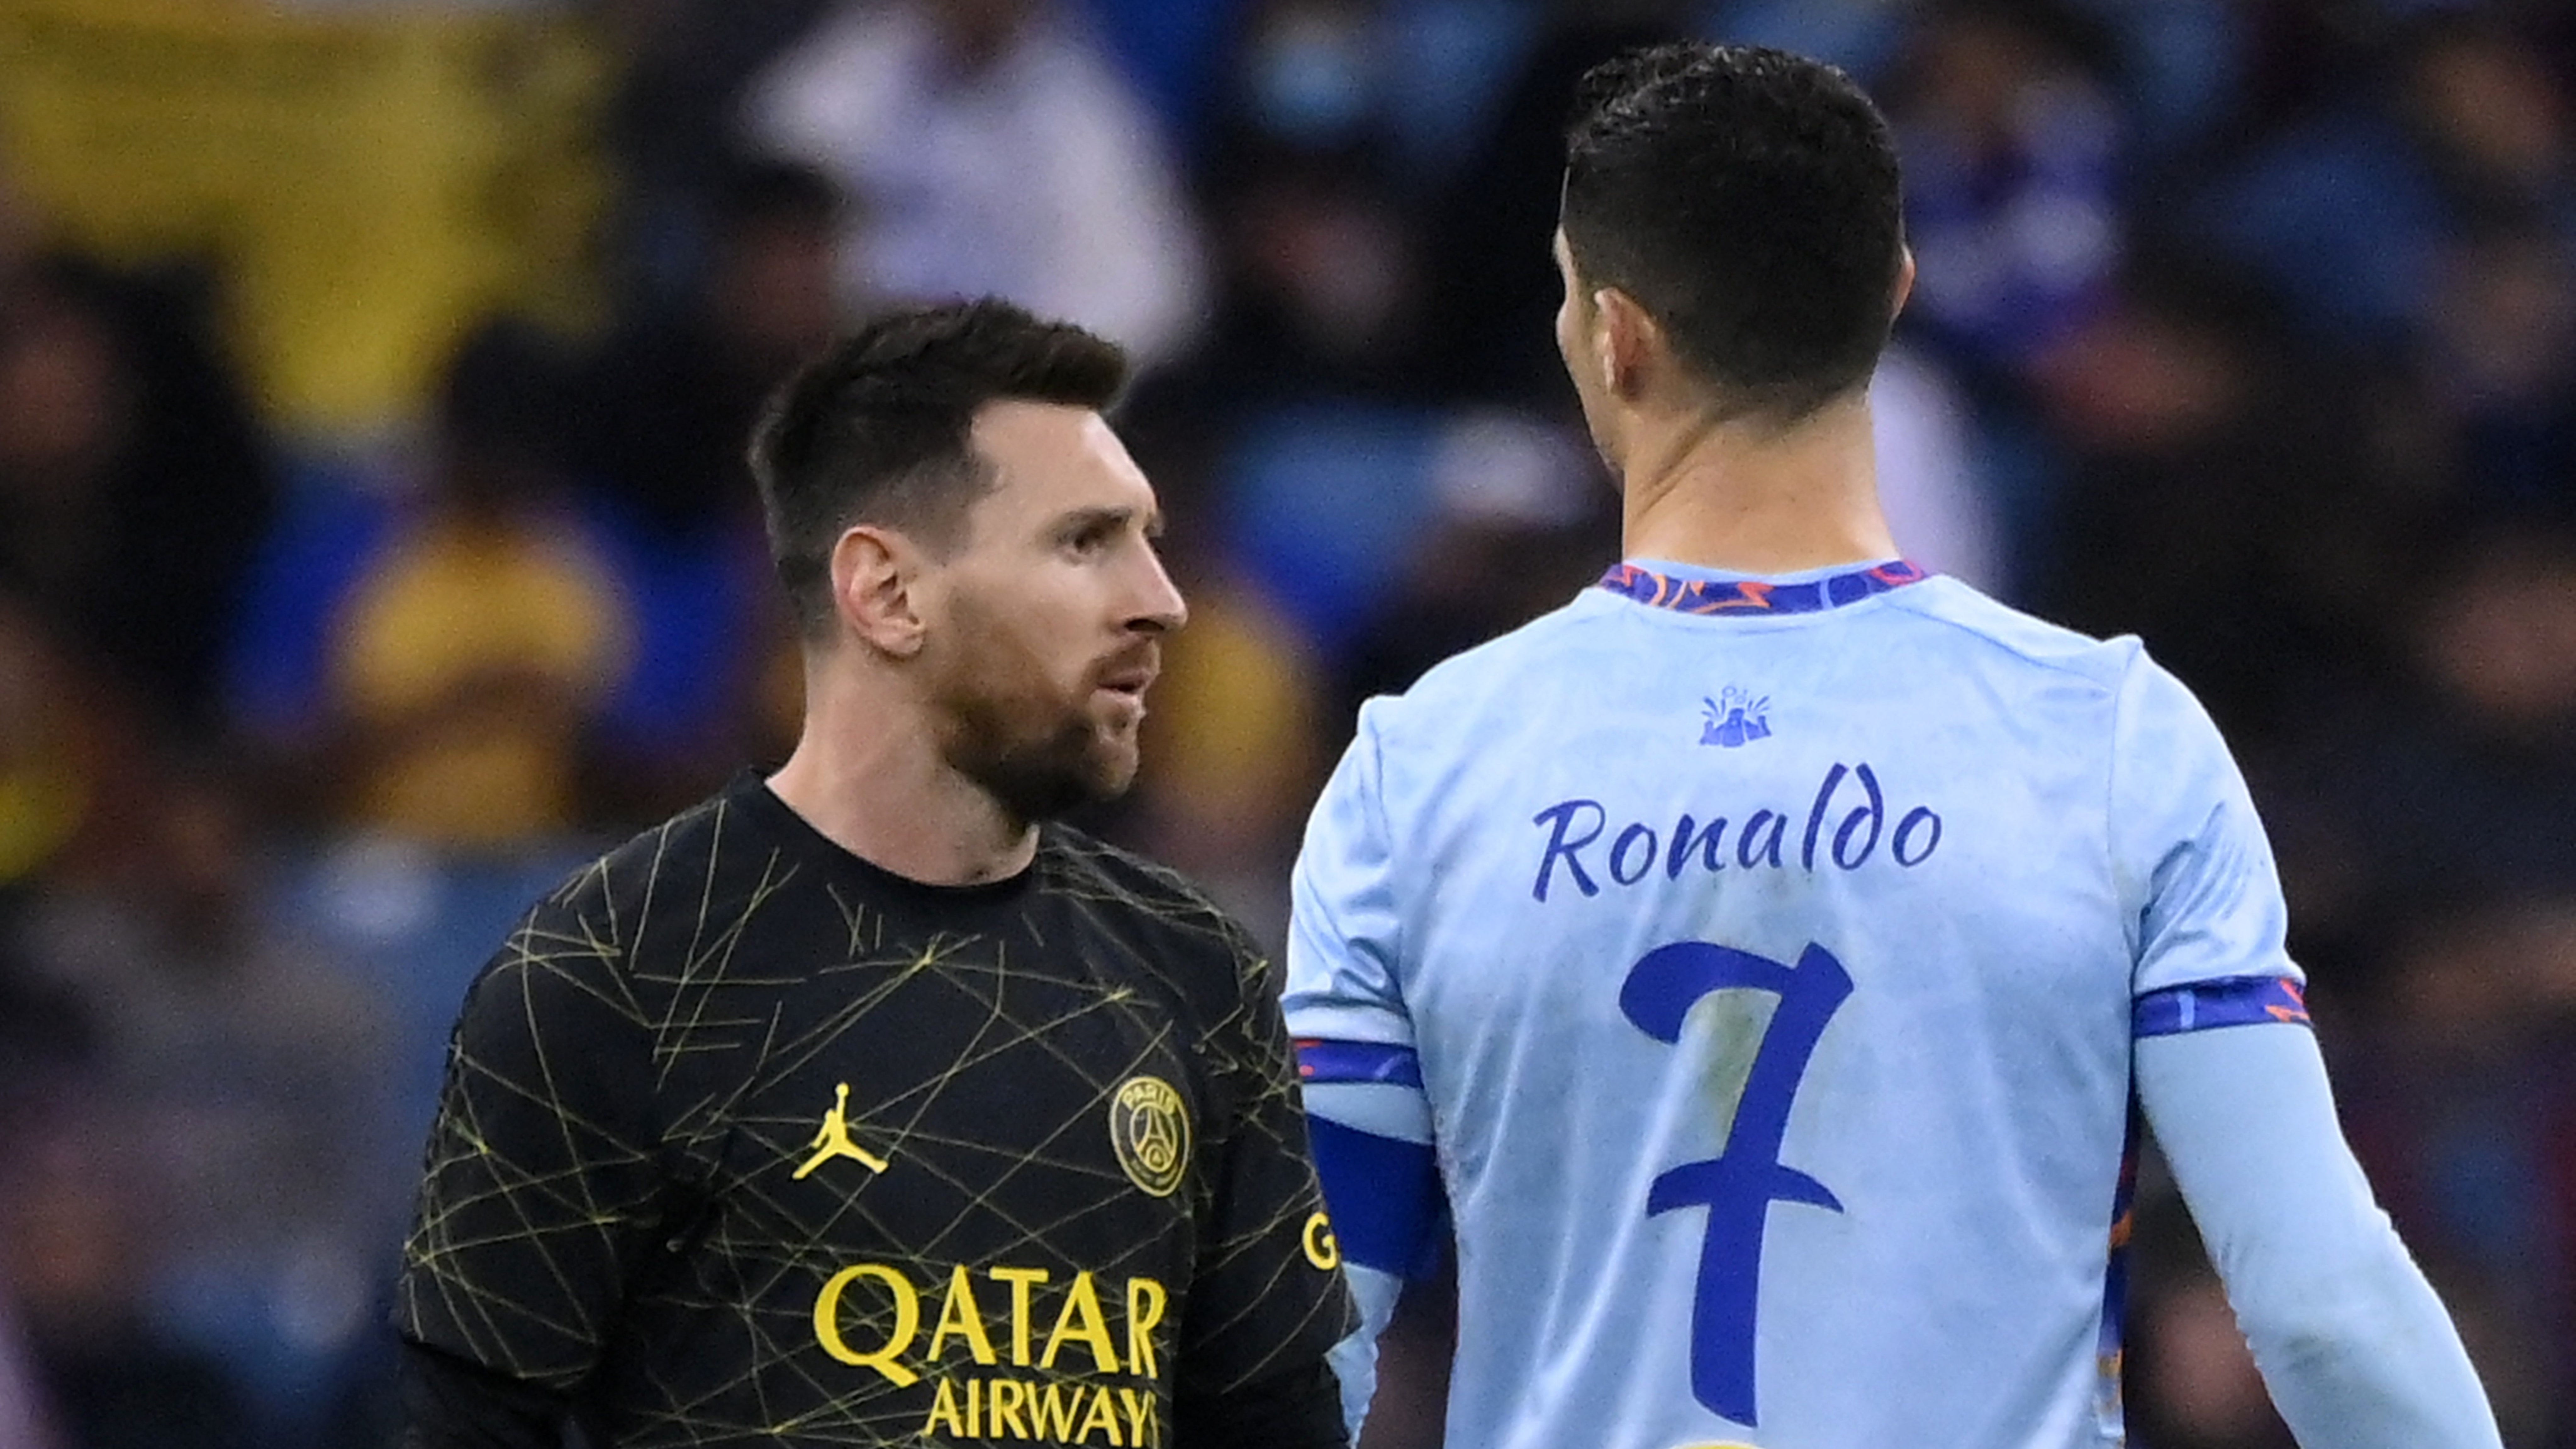 End of an era? Messi & Ronaldo trade goals in late-career clash as